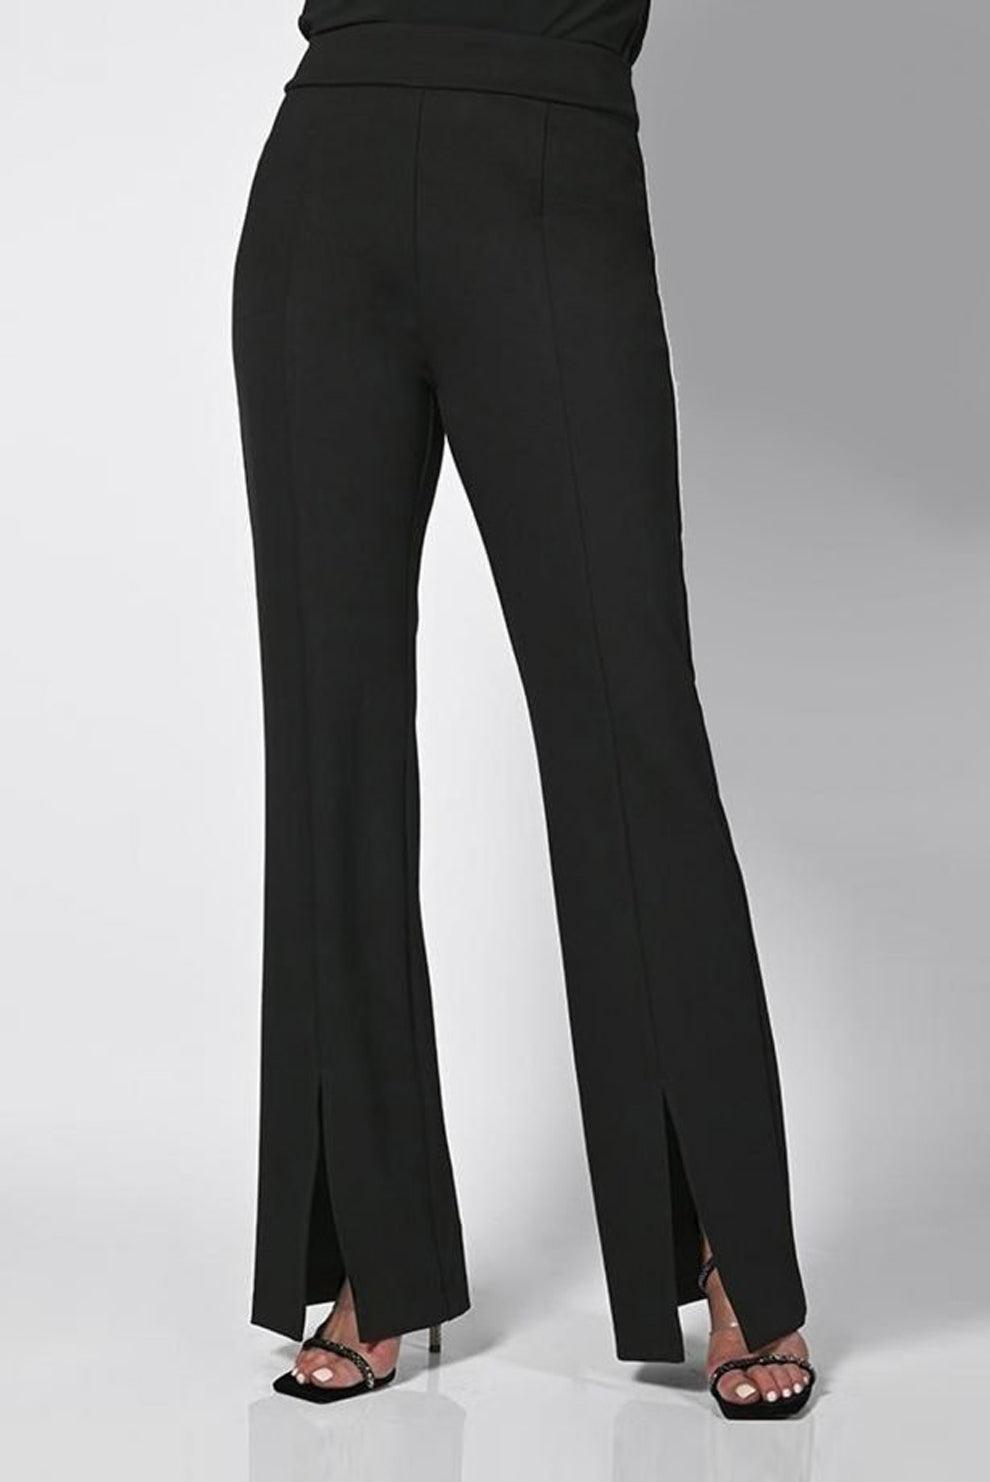 Frank Lyman Black Knit Pants | Style: 238135